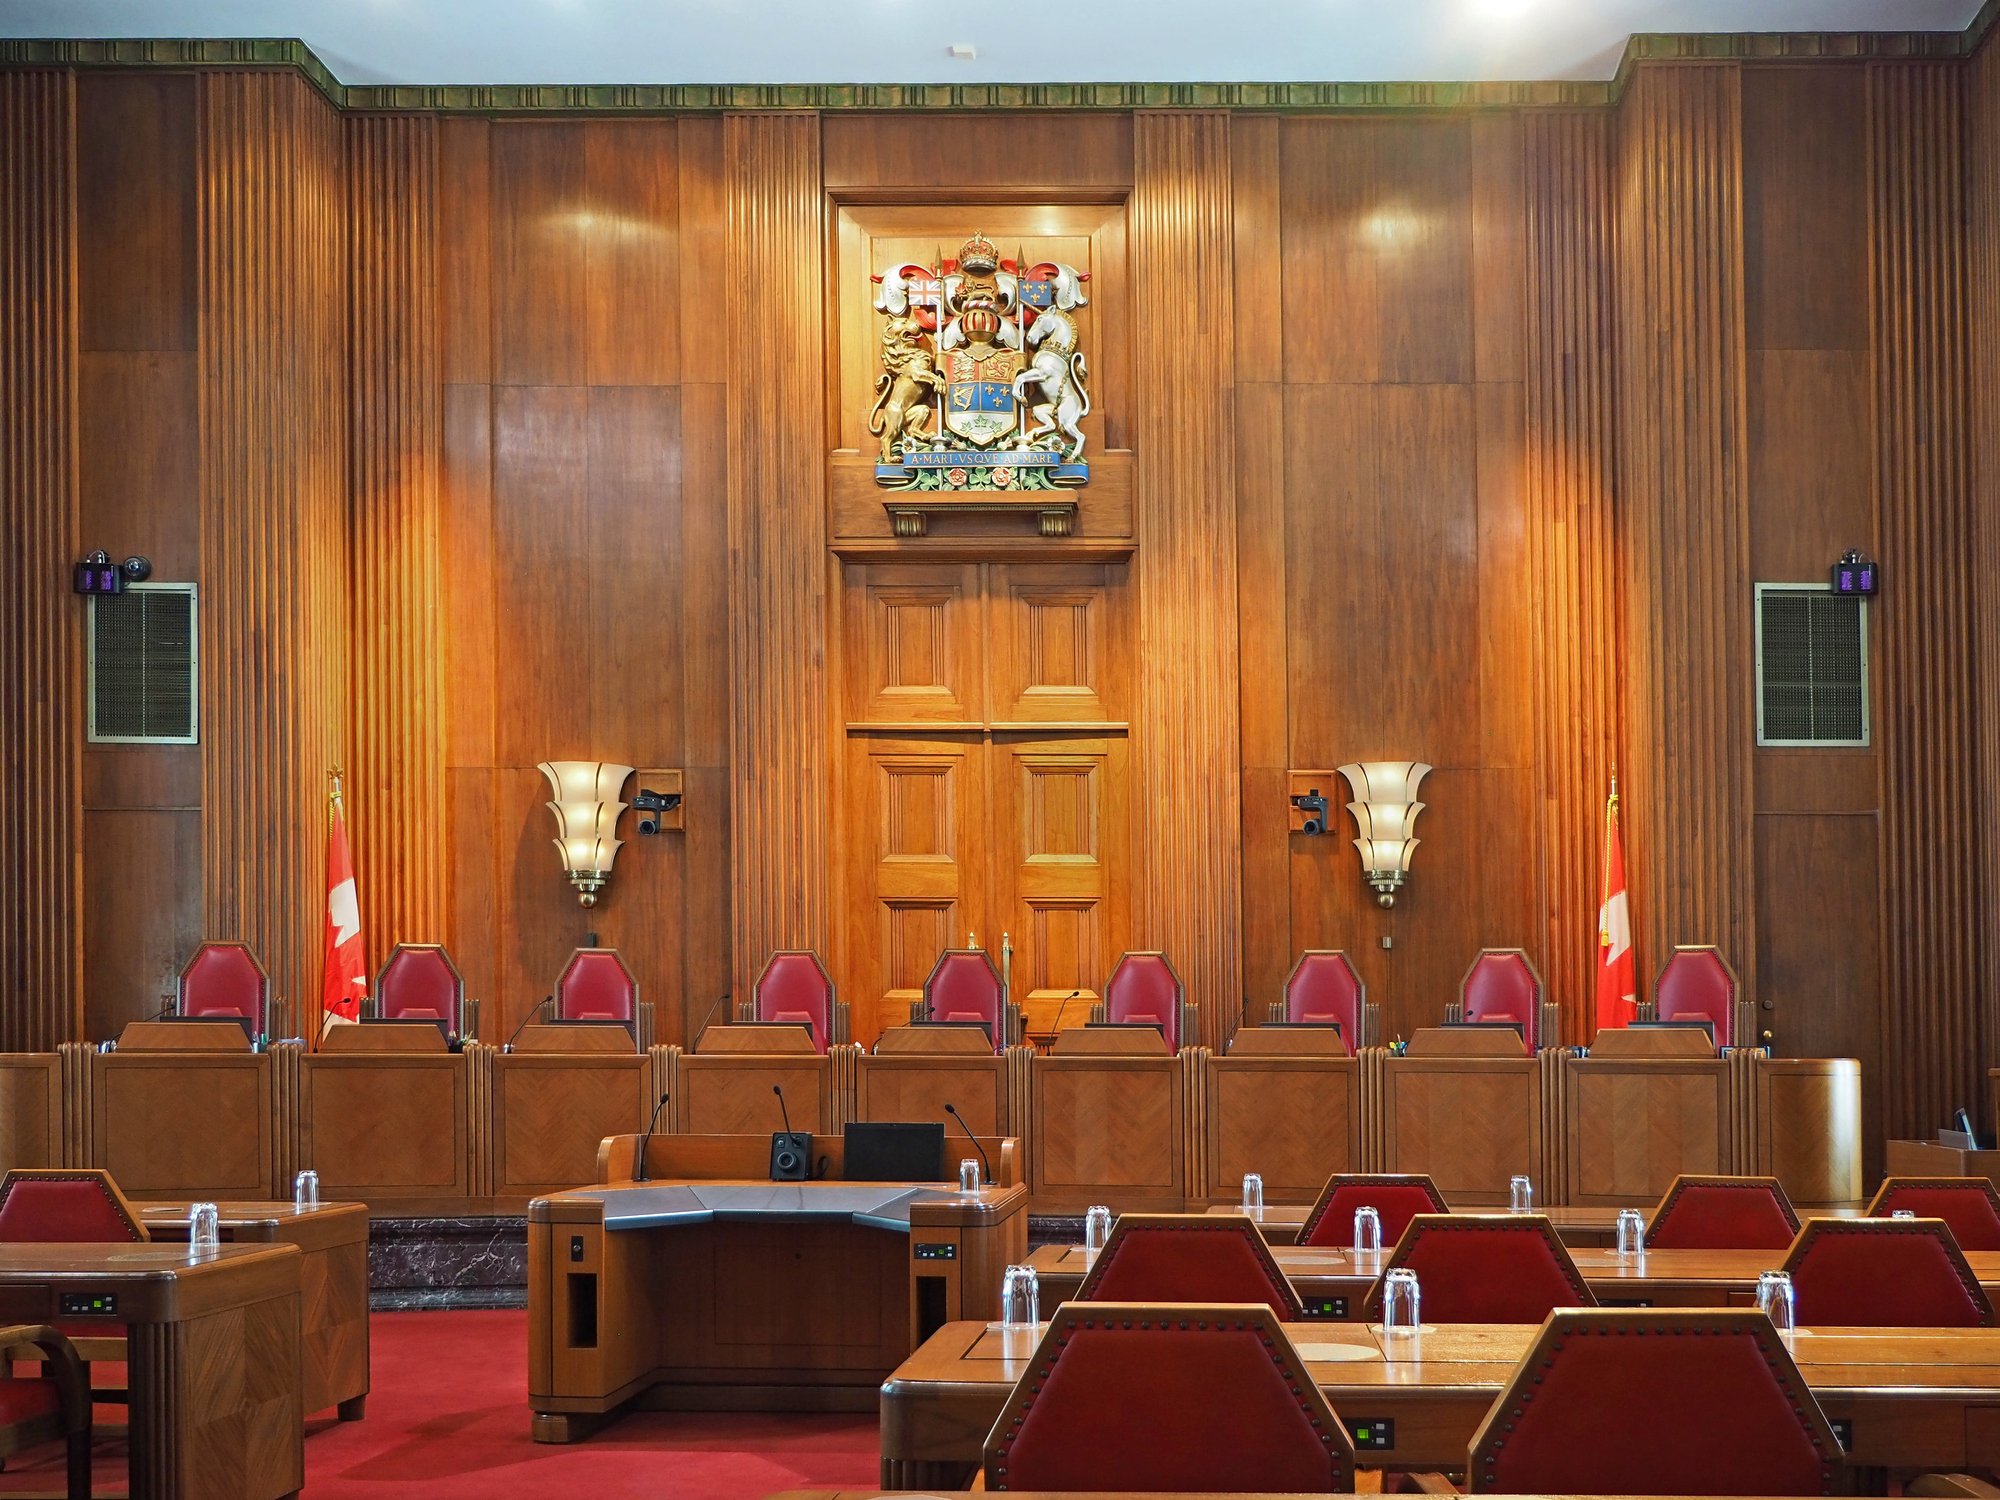 Split SCC confirms Ontario court ruling not to take jurisdiction in international child-custody case